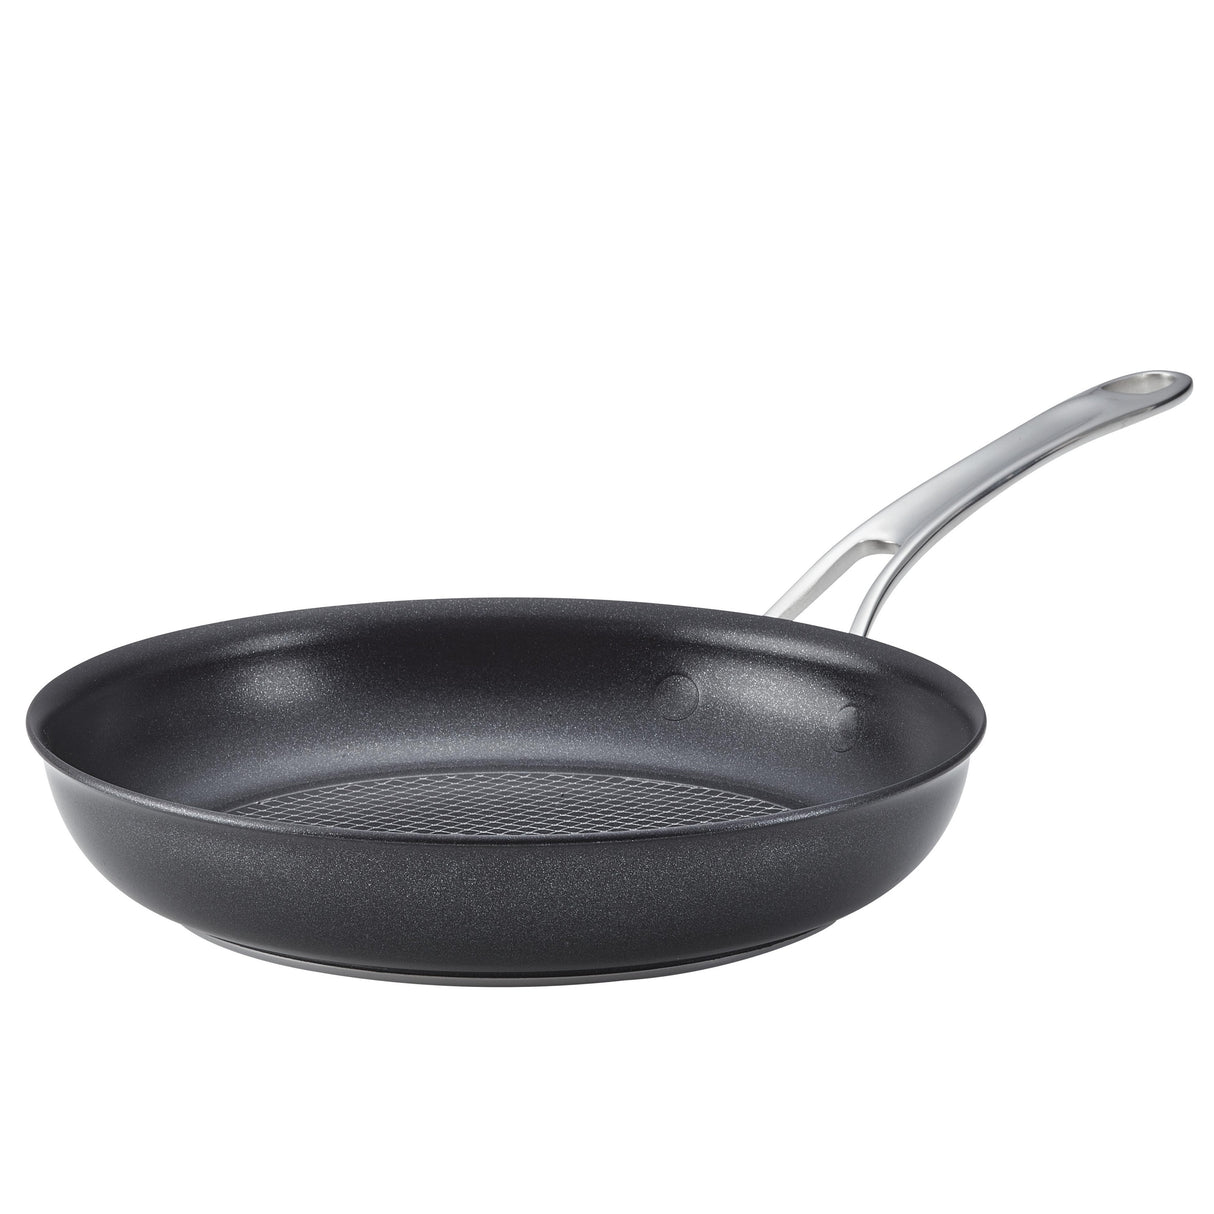 Anolon X SearTech Non Stick Frying Pan